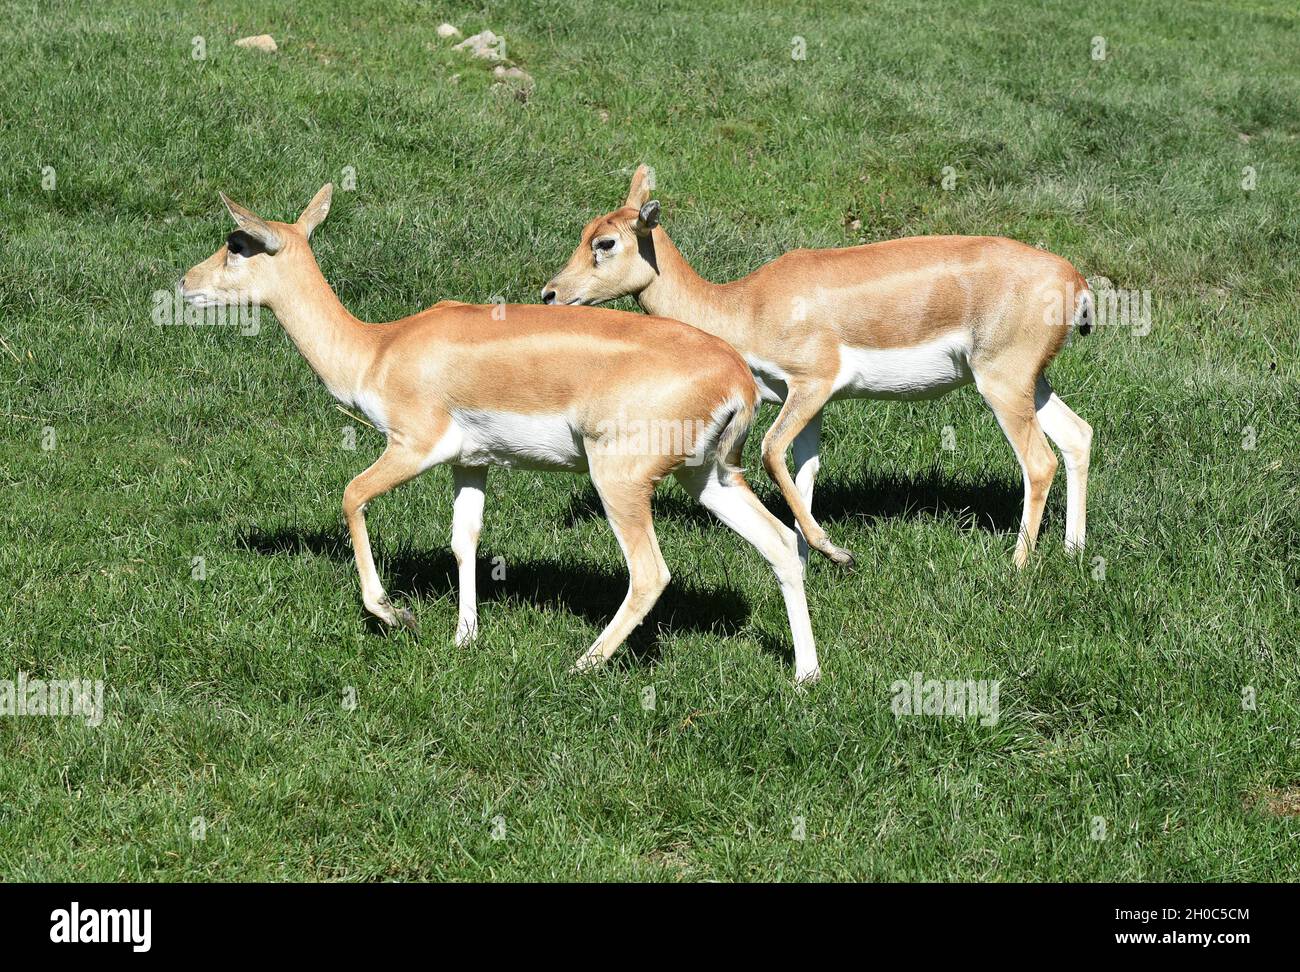 Hirschziegenantilope, Mammalia Ruminantia, ist eine Antilopenart in   Asien. Deer goat antelope, Mammalia ruminantia, is a species of antelope found i Stock Photo